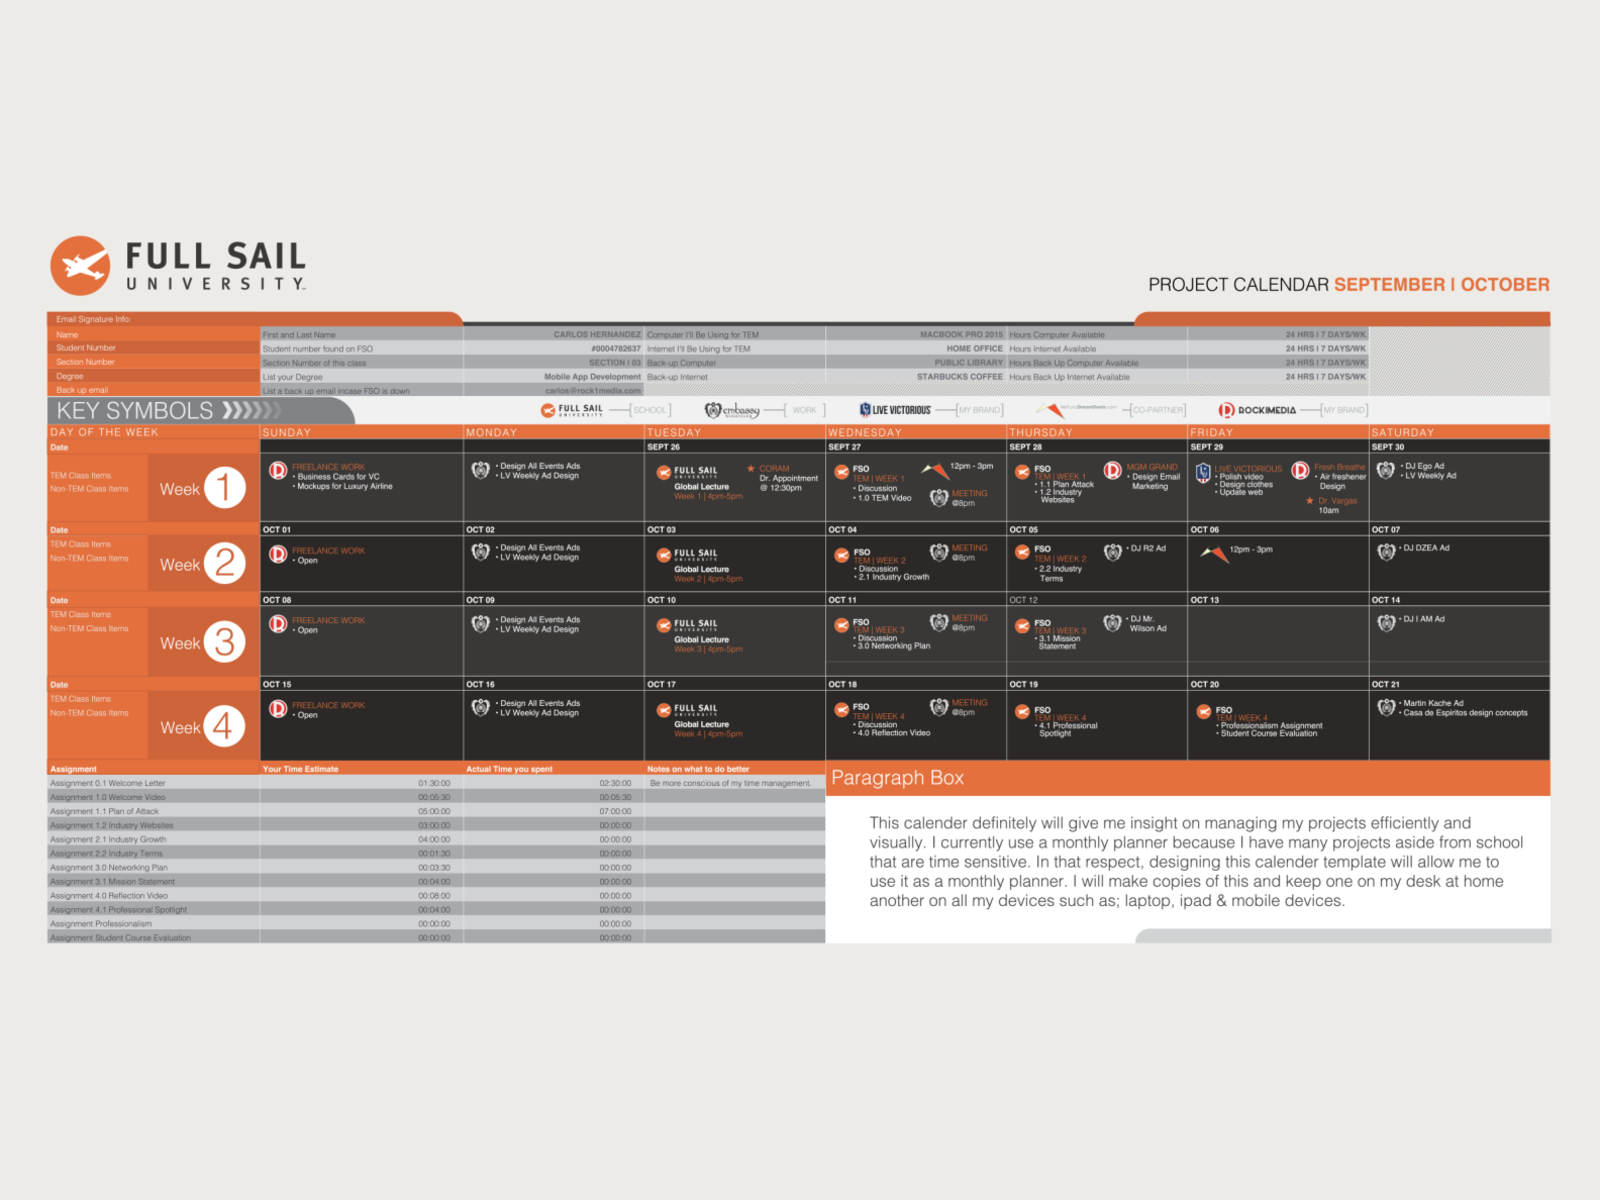 full sail university calendar by Carlos H on Dribbble